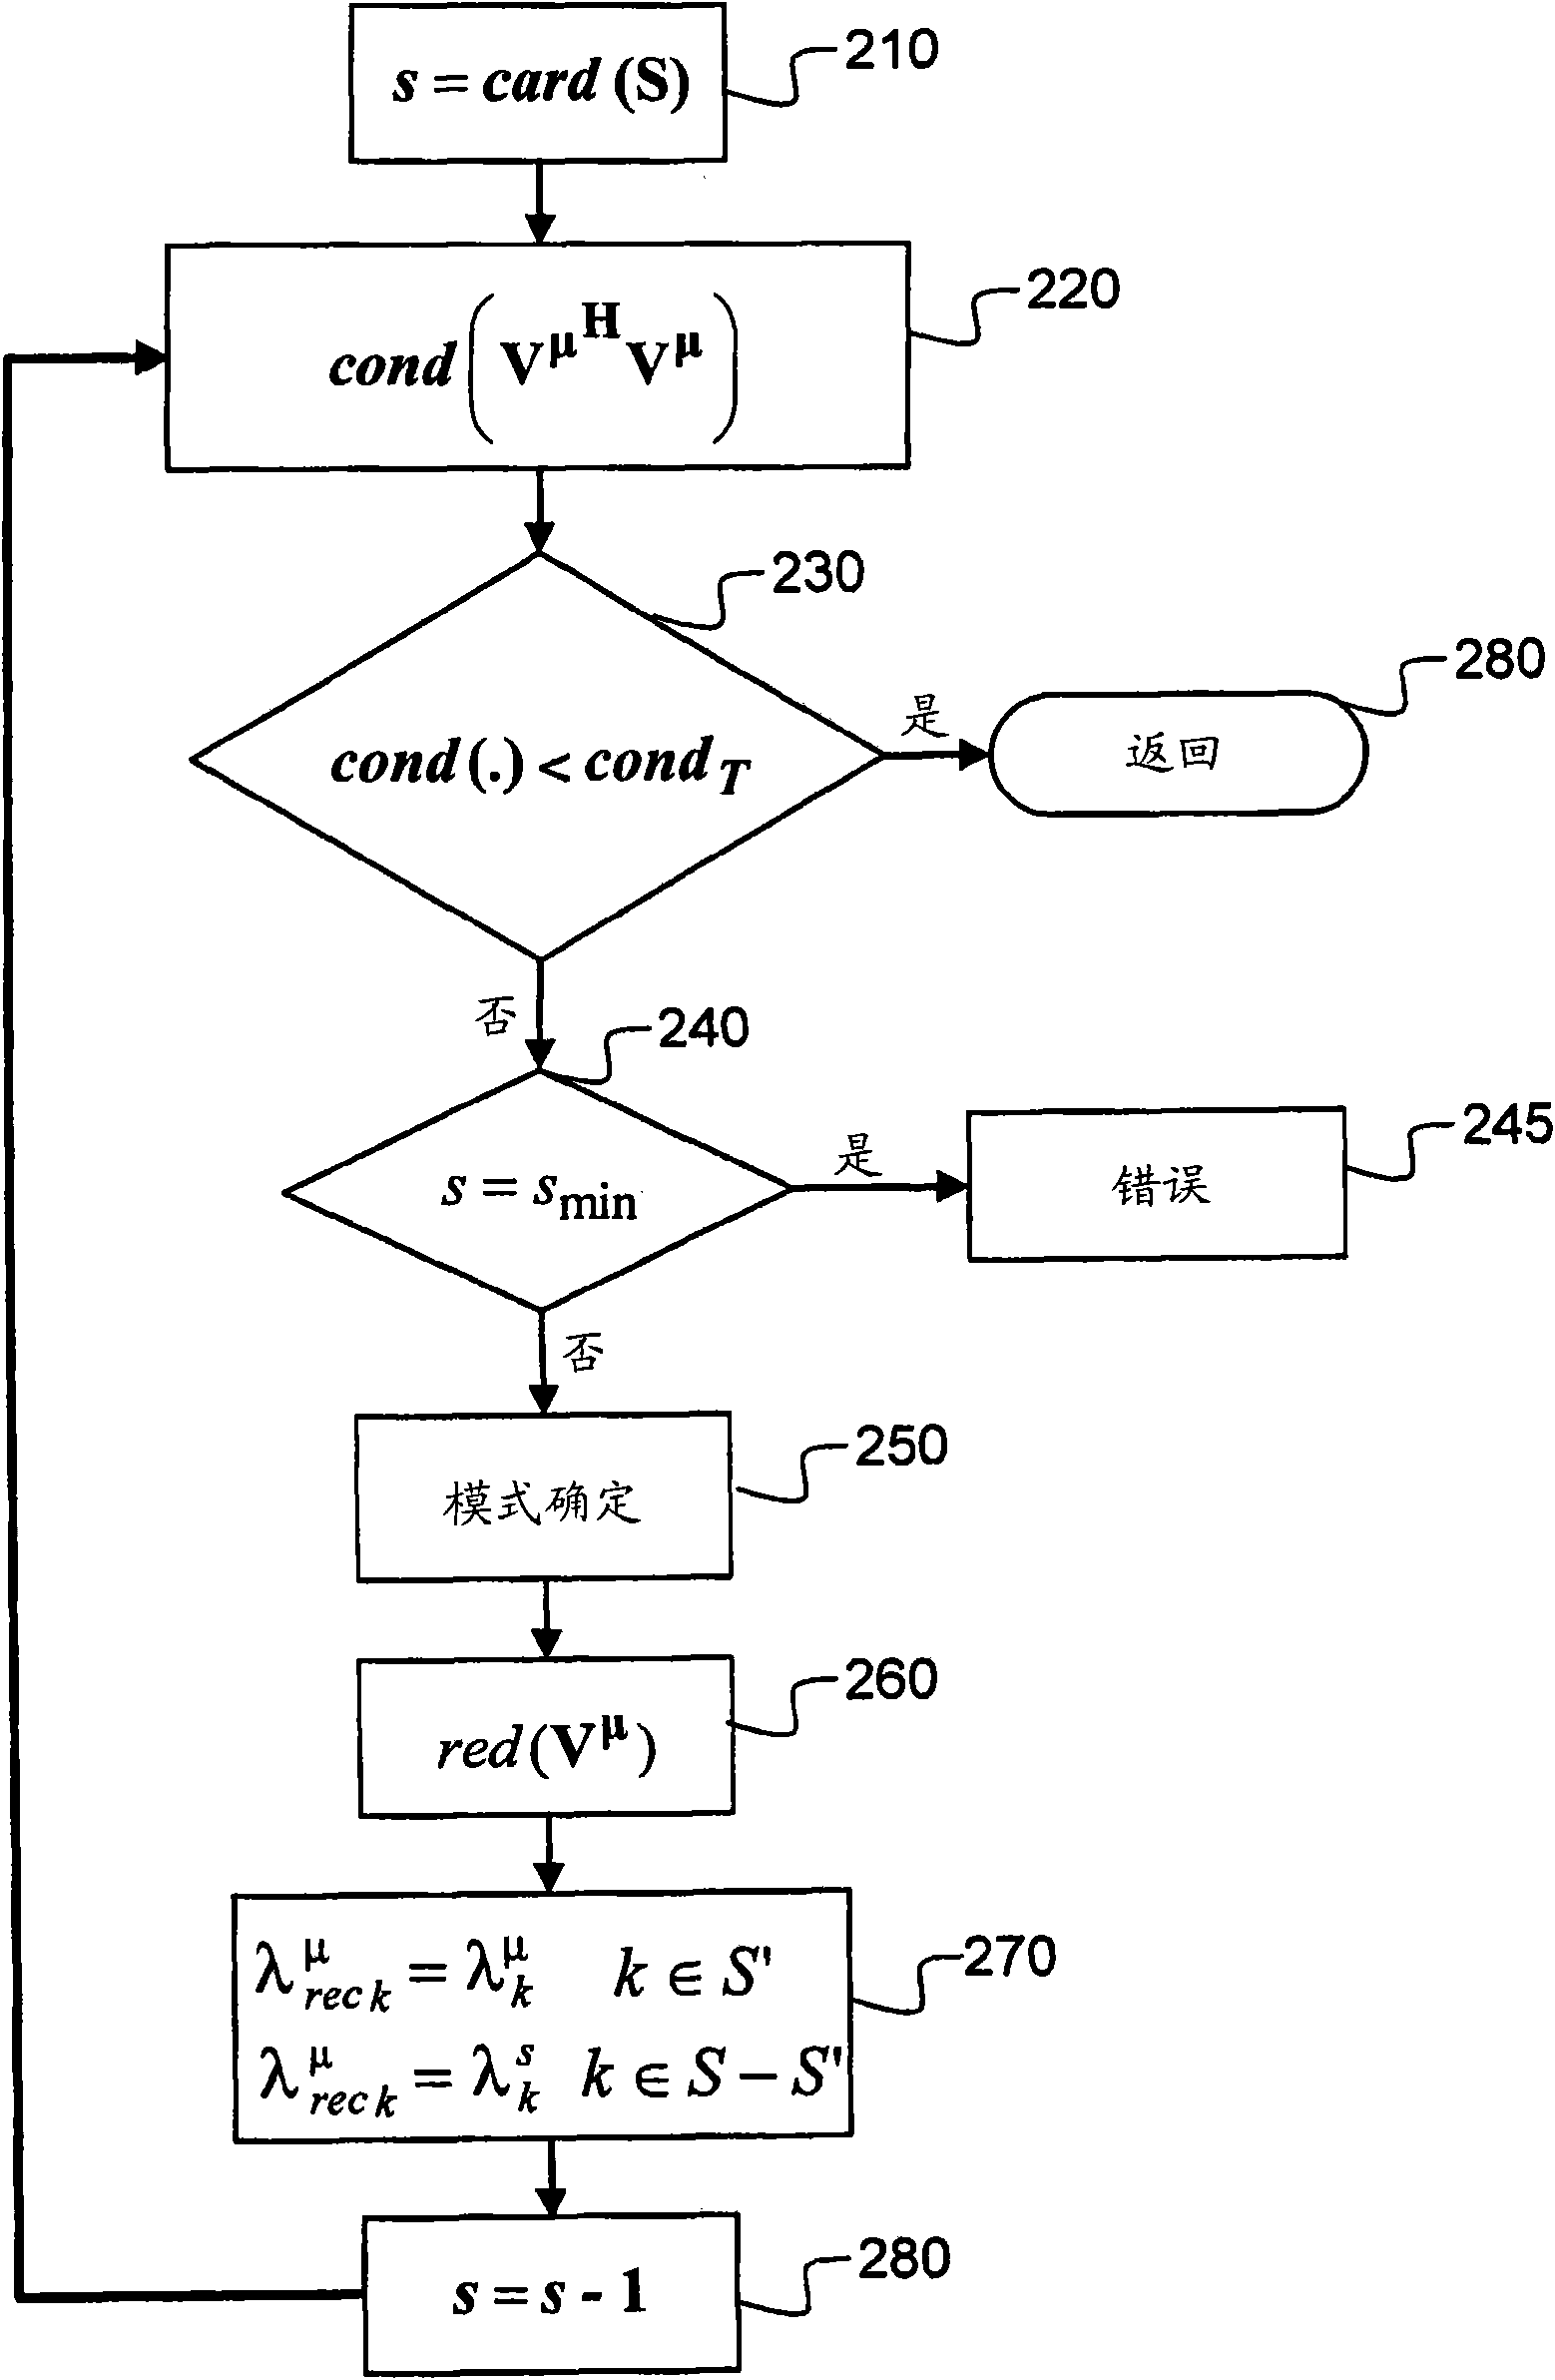 Method of estimation of equivalent radar surface